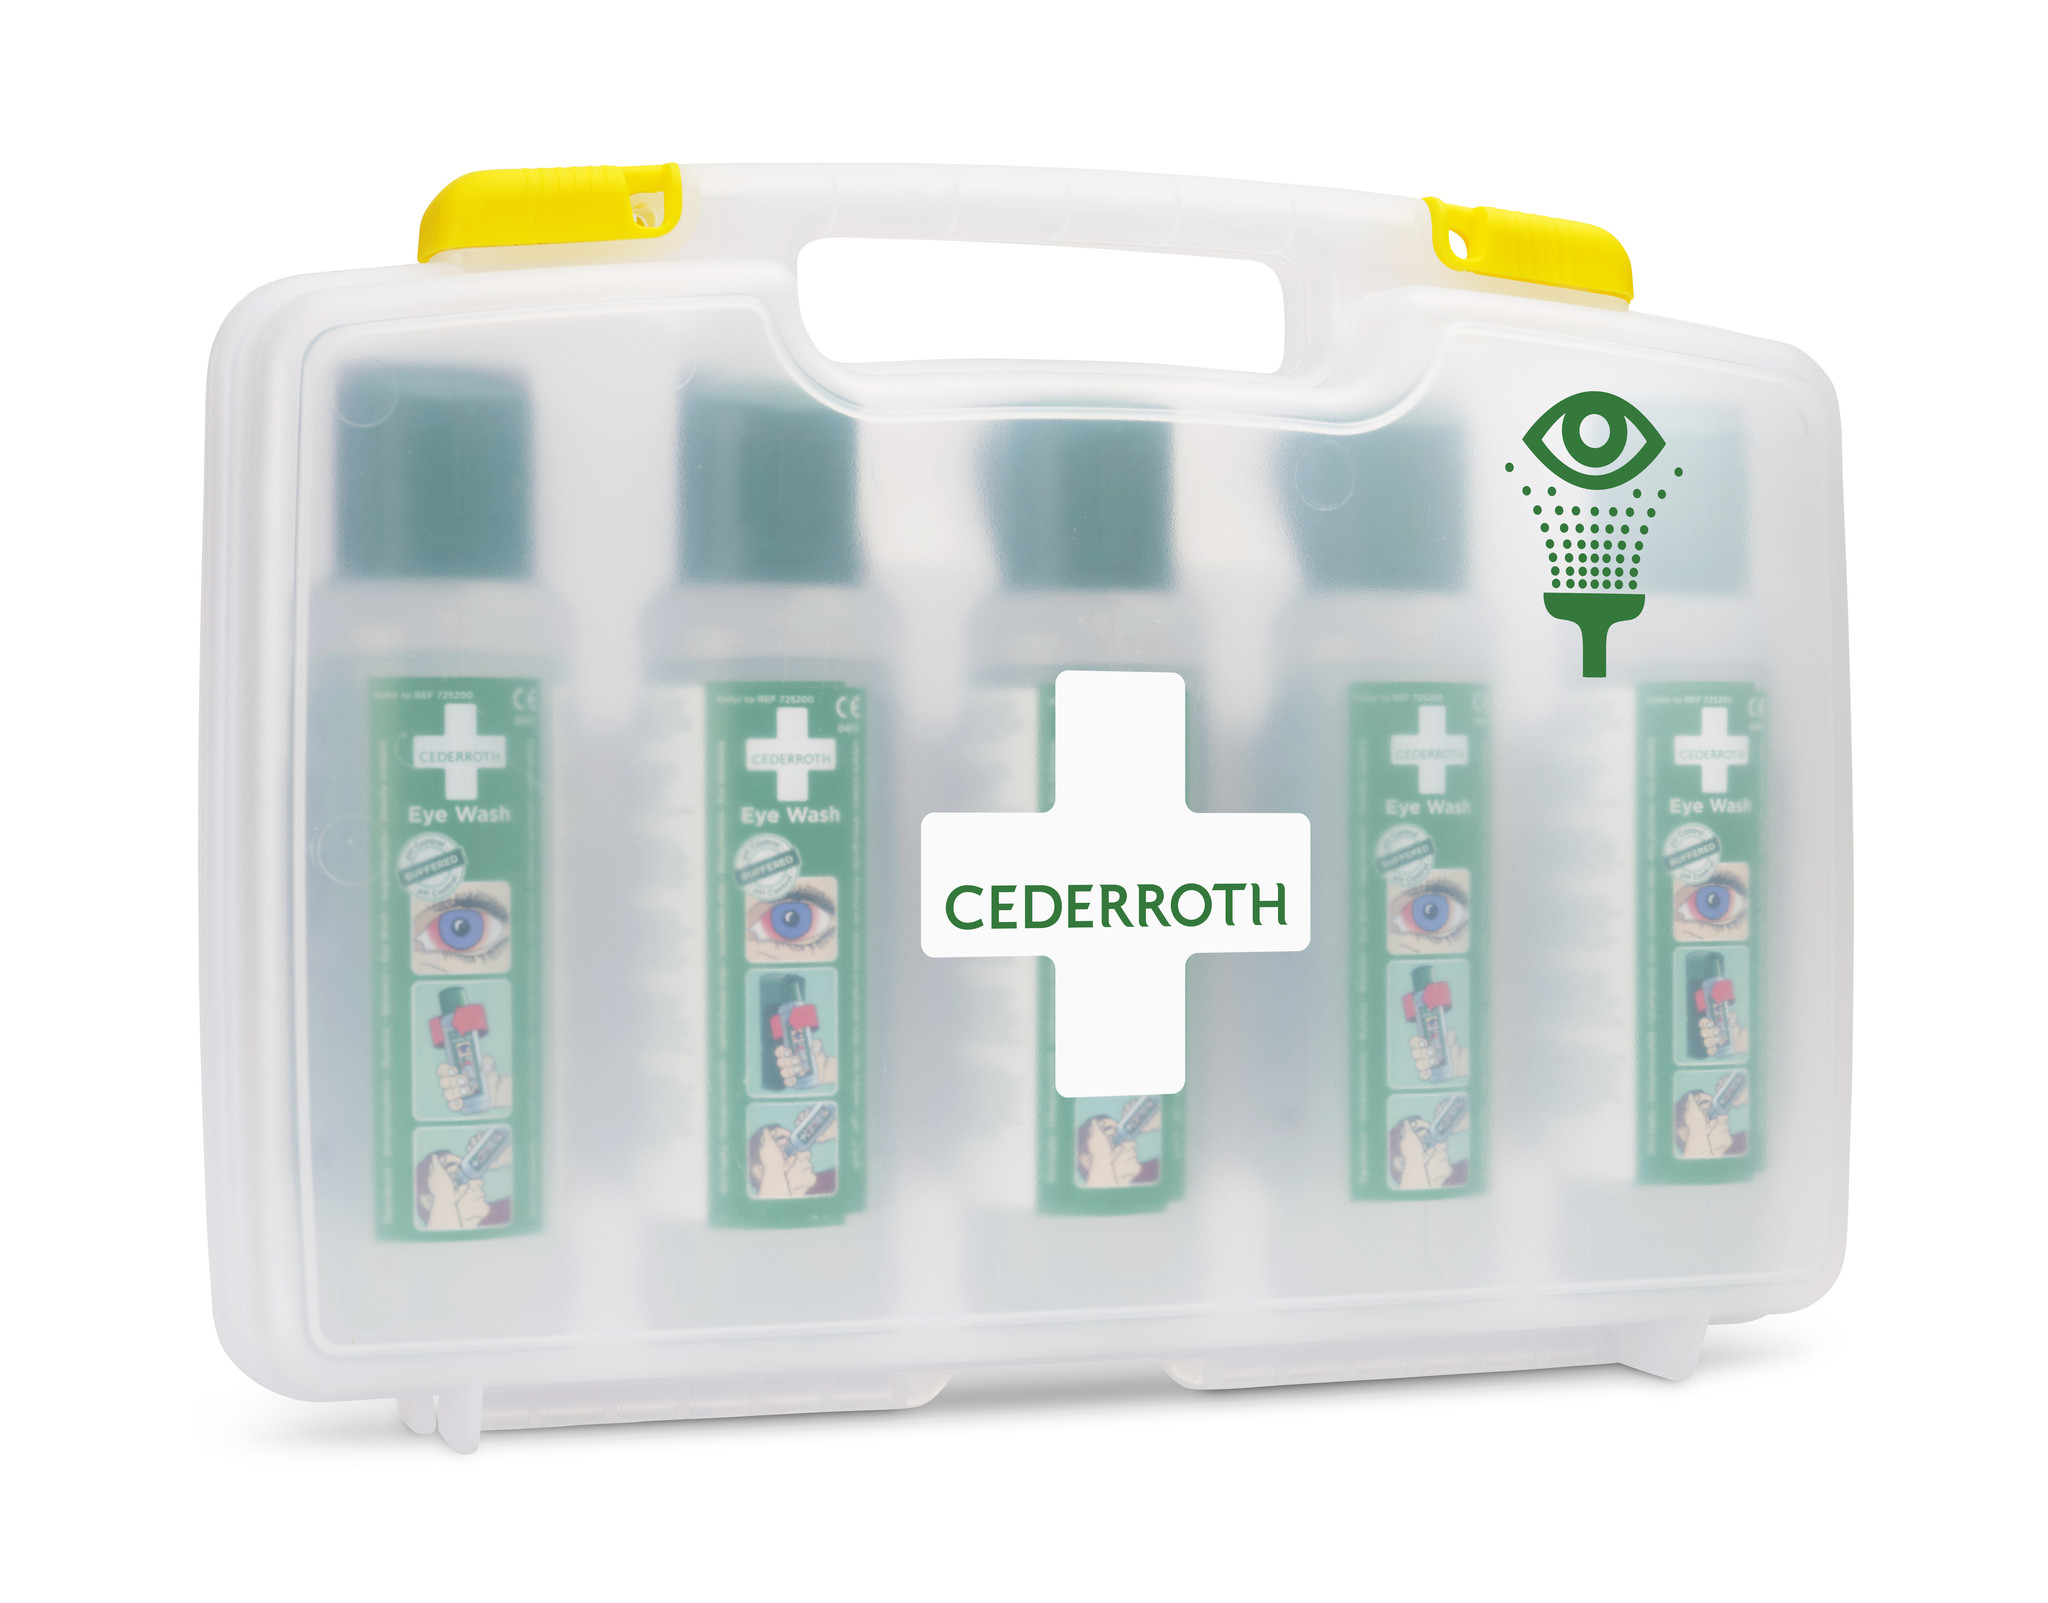 Cederroth Eye wash 5 x 500ml - 5stuks per koffer